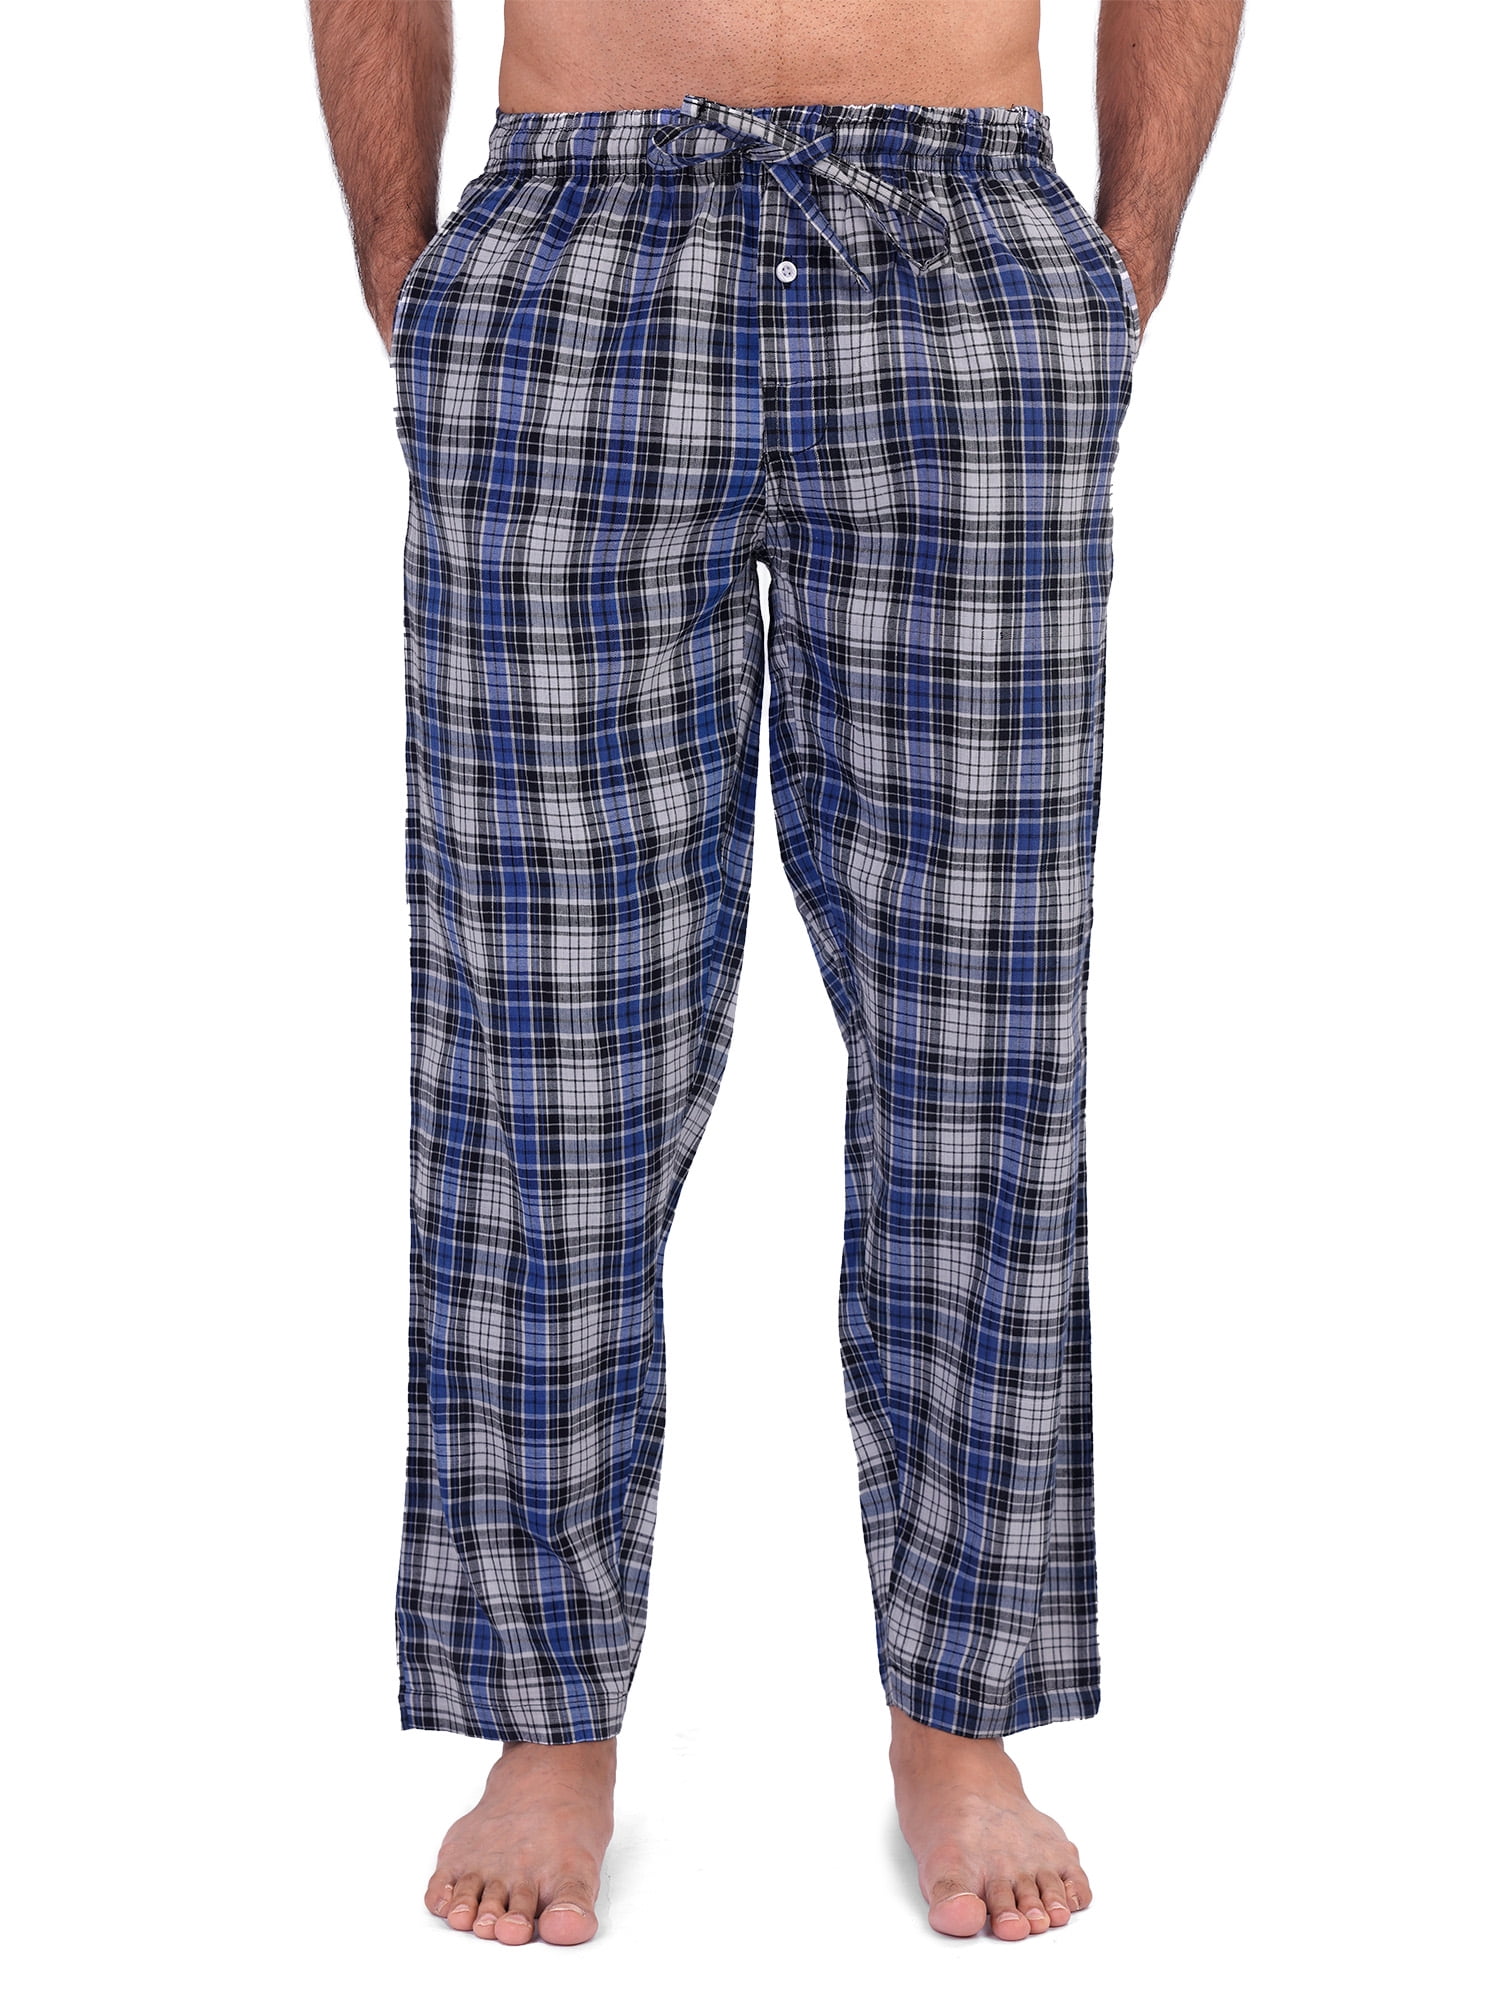 Buy Fflirtygo Mens Cotton Pyjama Bottom 100 Hosiery Cotton Export  Quality Fabric Black and White Stripe Pyjama for Men Mens Leisure Wear  Night Wear Pajama at Amazonin